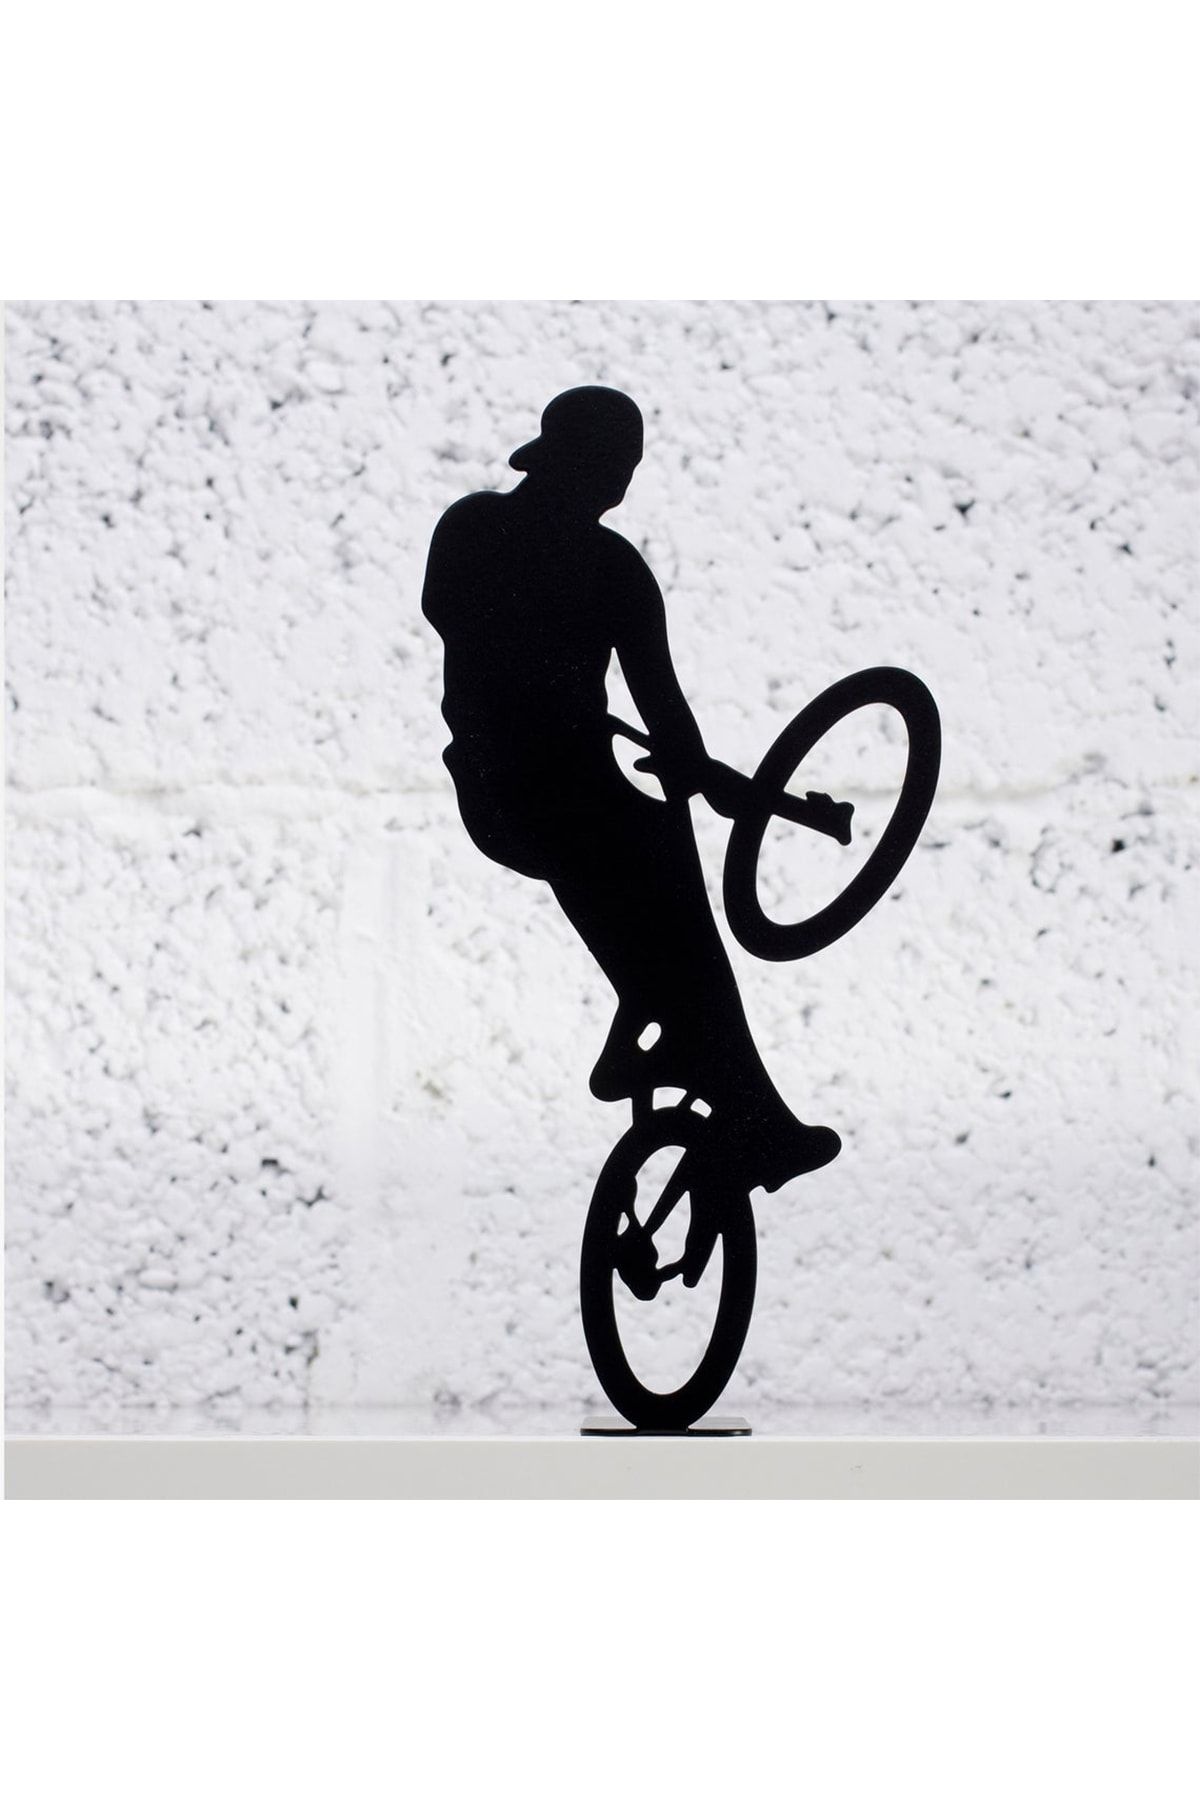 Svava Extreme Bisiklet Sürücüsü - Dekoratif Metal Obje